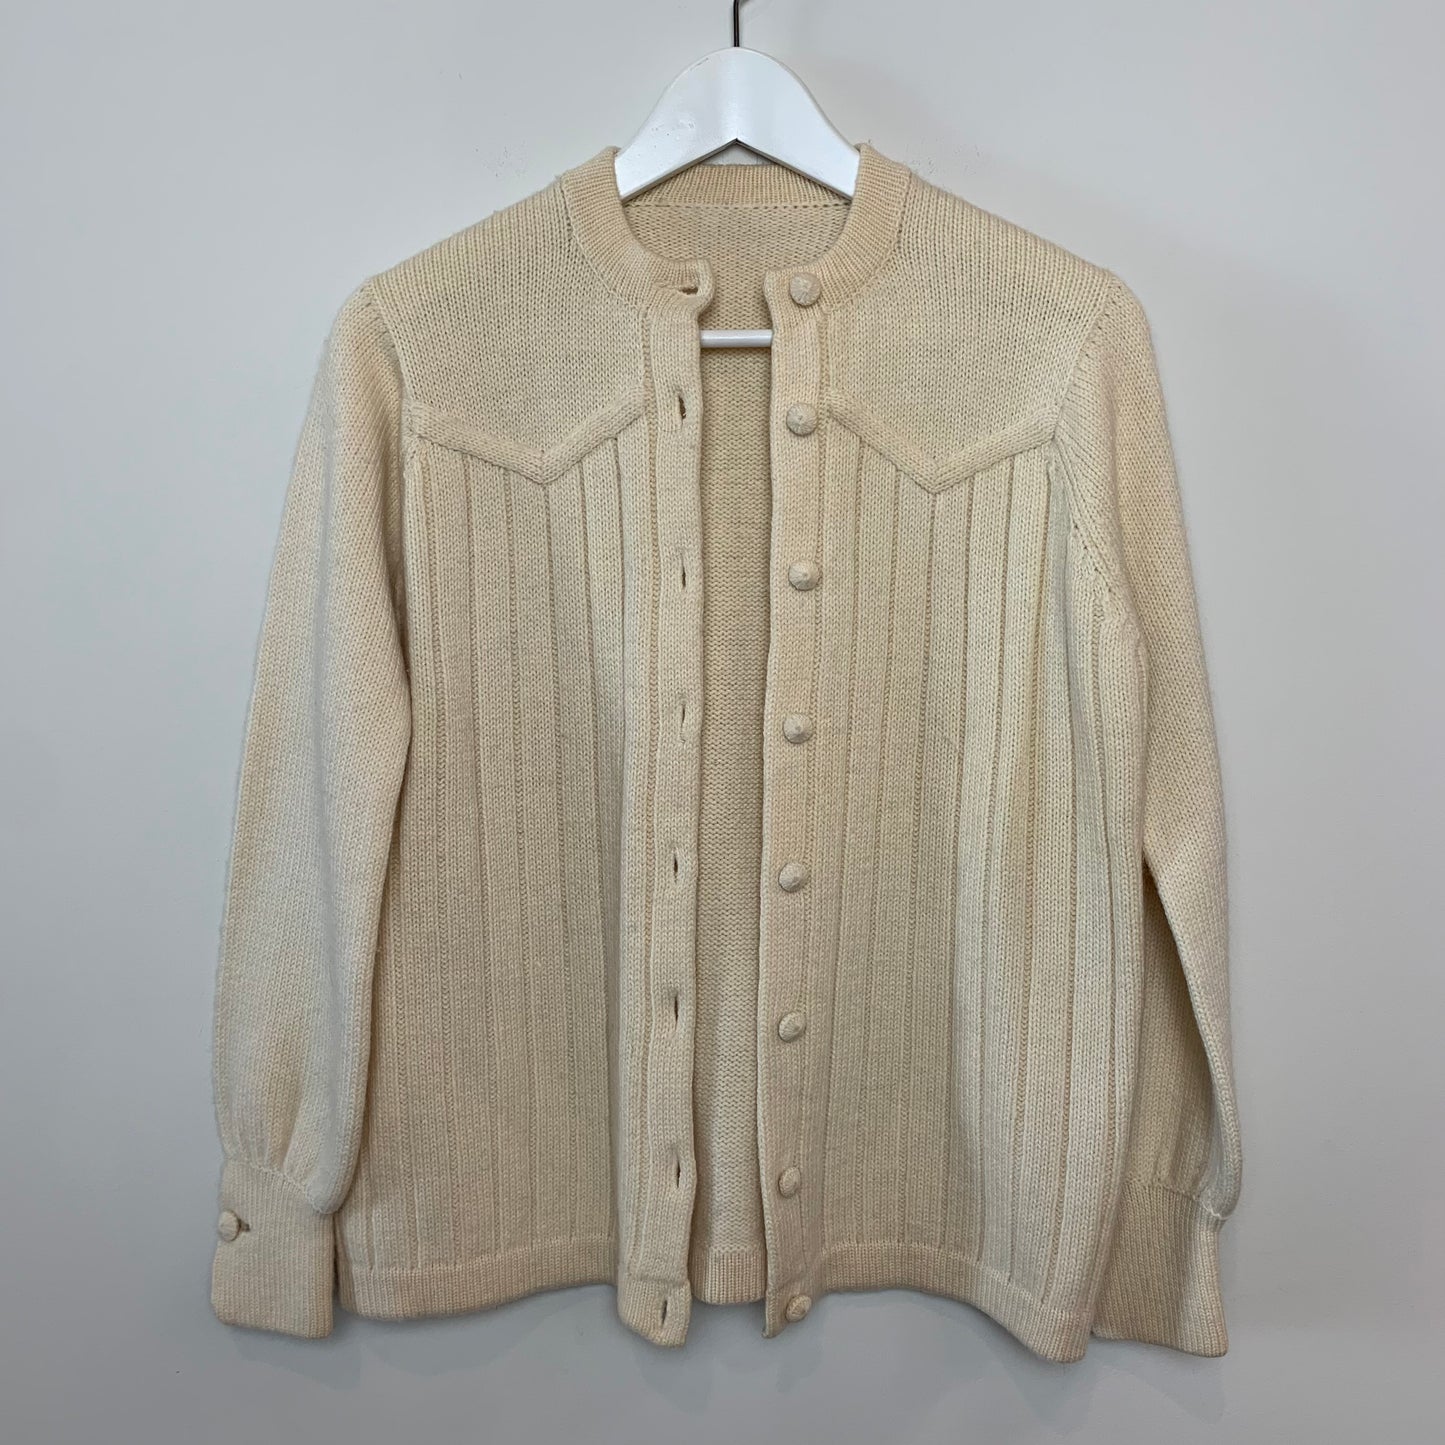 Vintage cream cardigan Knit Sweater